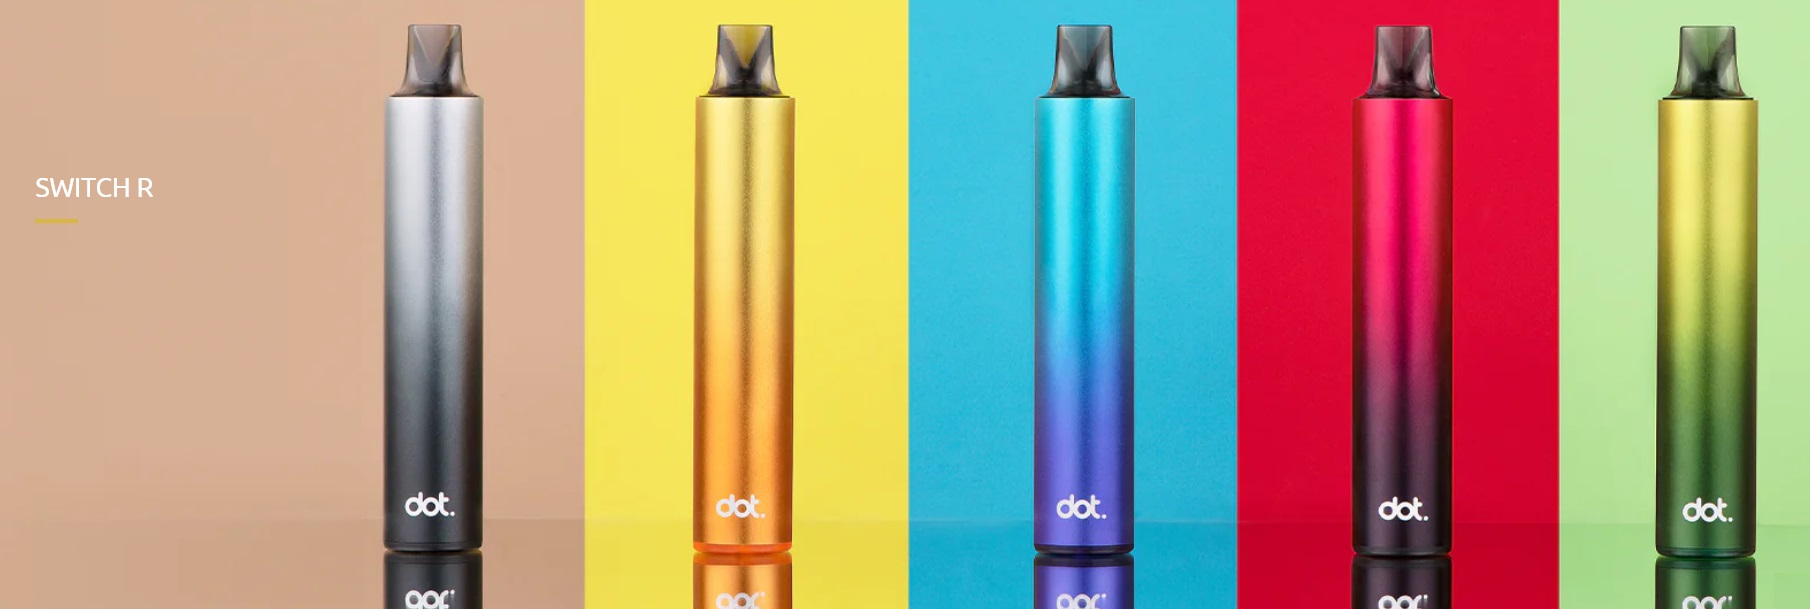 elektronicka-cigareta-dotmod-switch-r-pod-1000mah-barevne-varianty